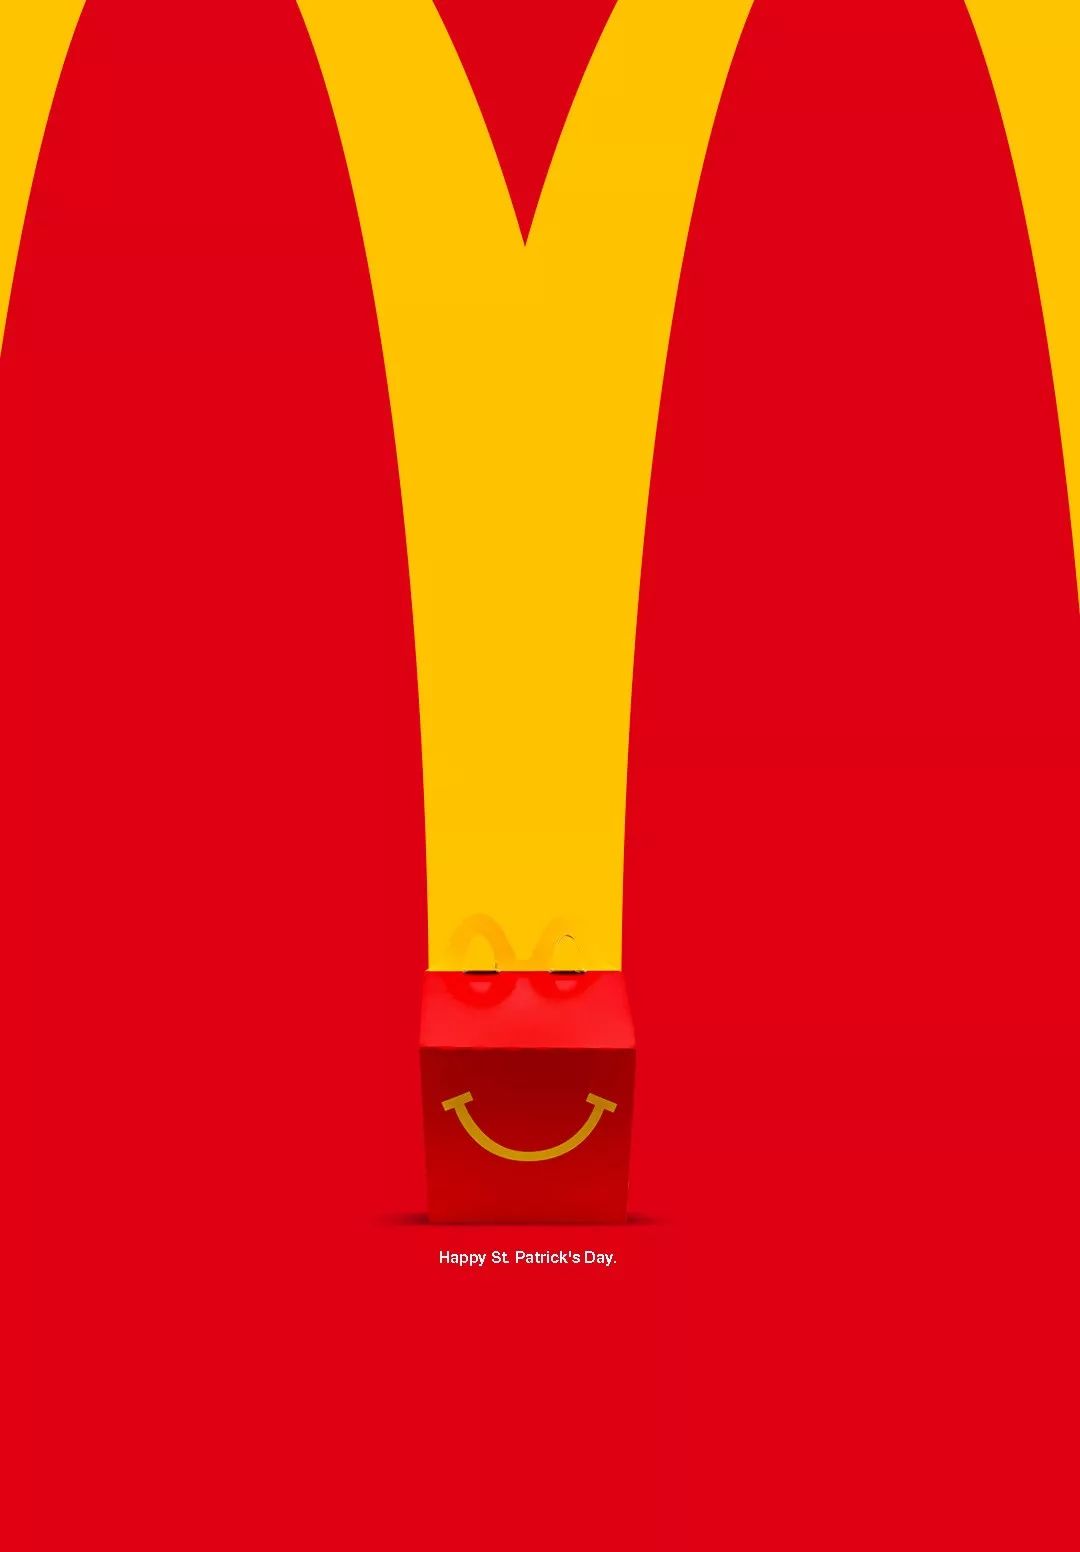 St.patrick‘s day圣帕特里克节：麦当劳广告欣赏